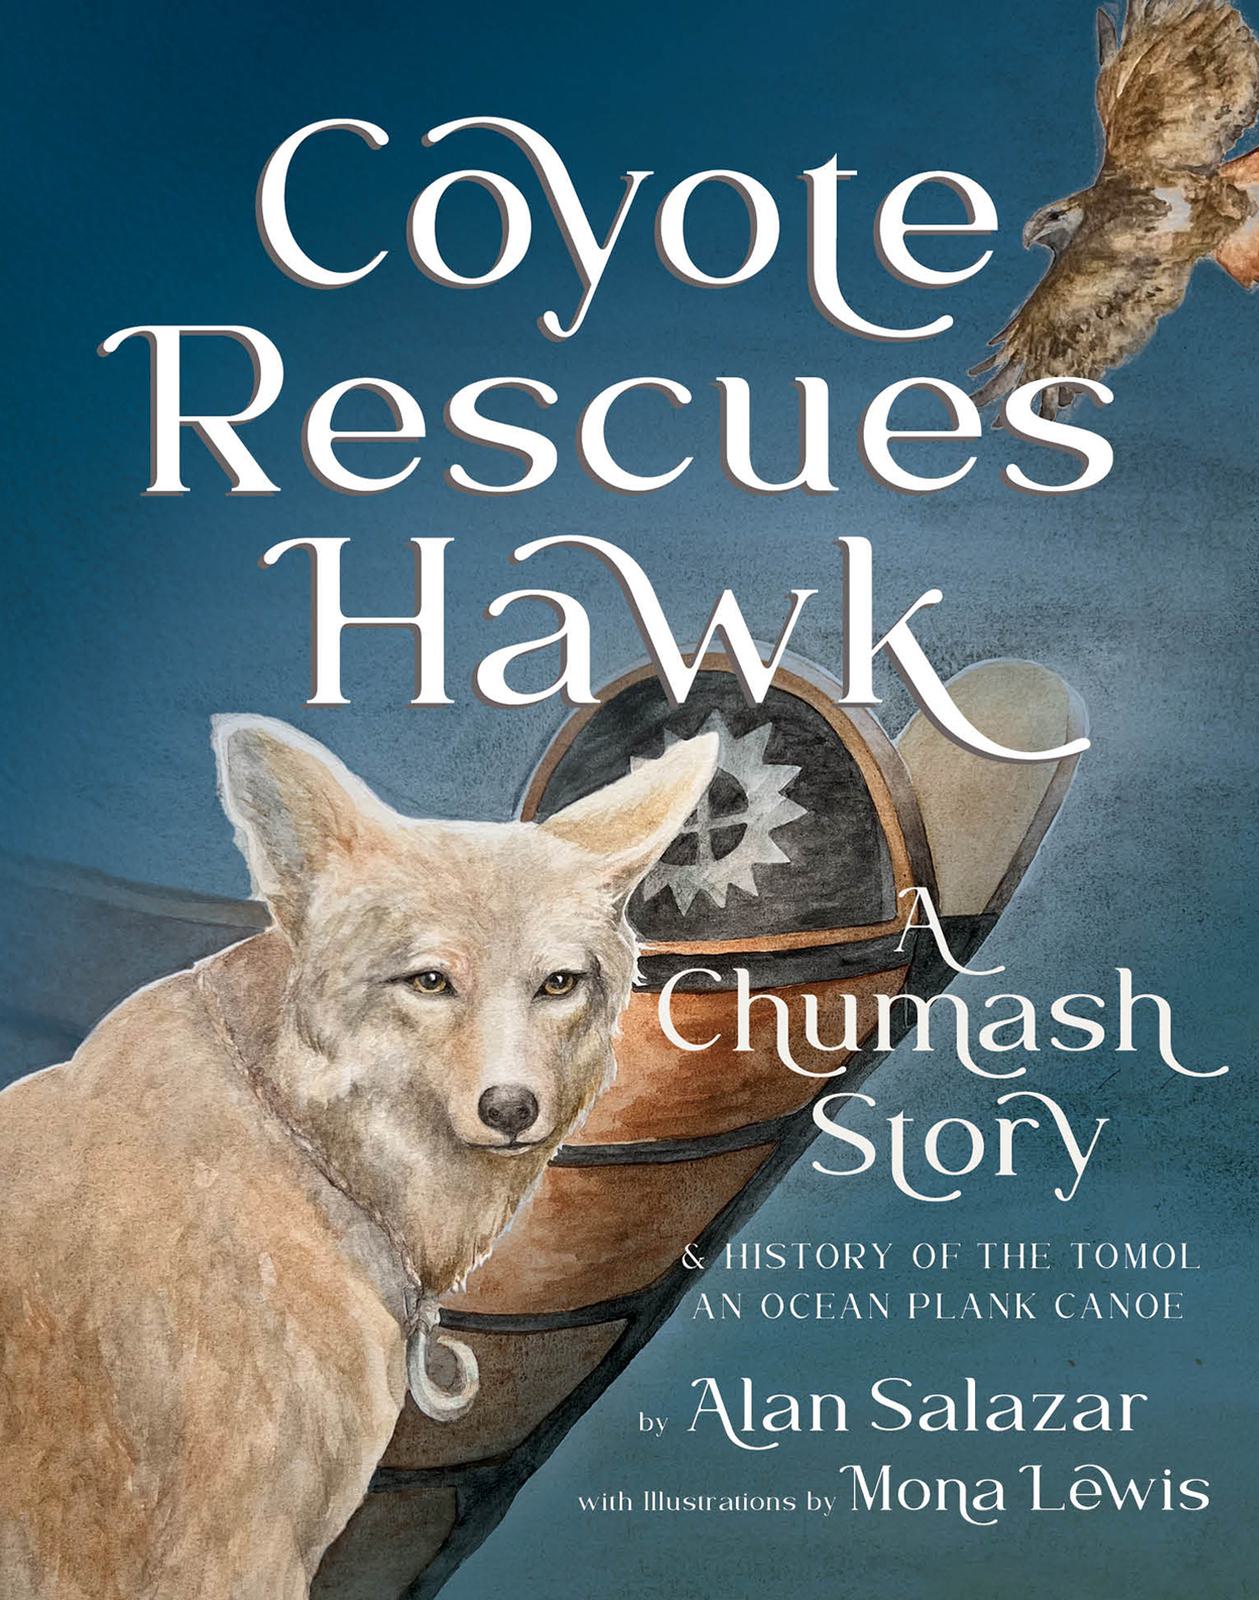 Coyote Rescues Hawk book cover